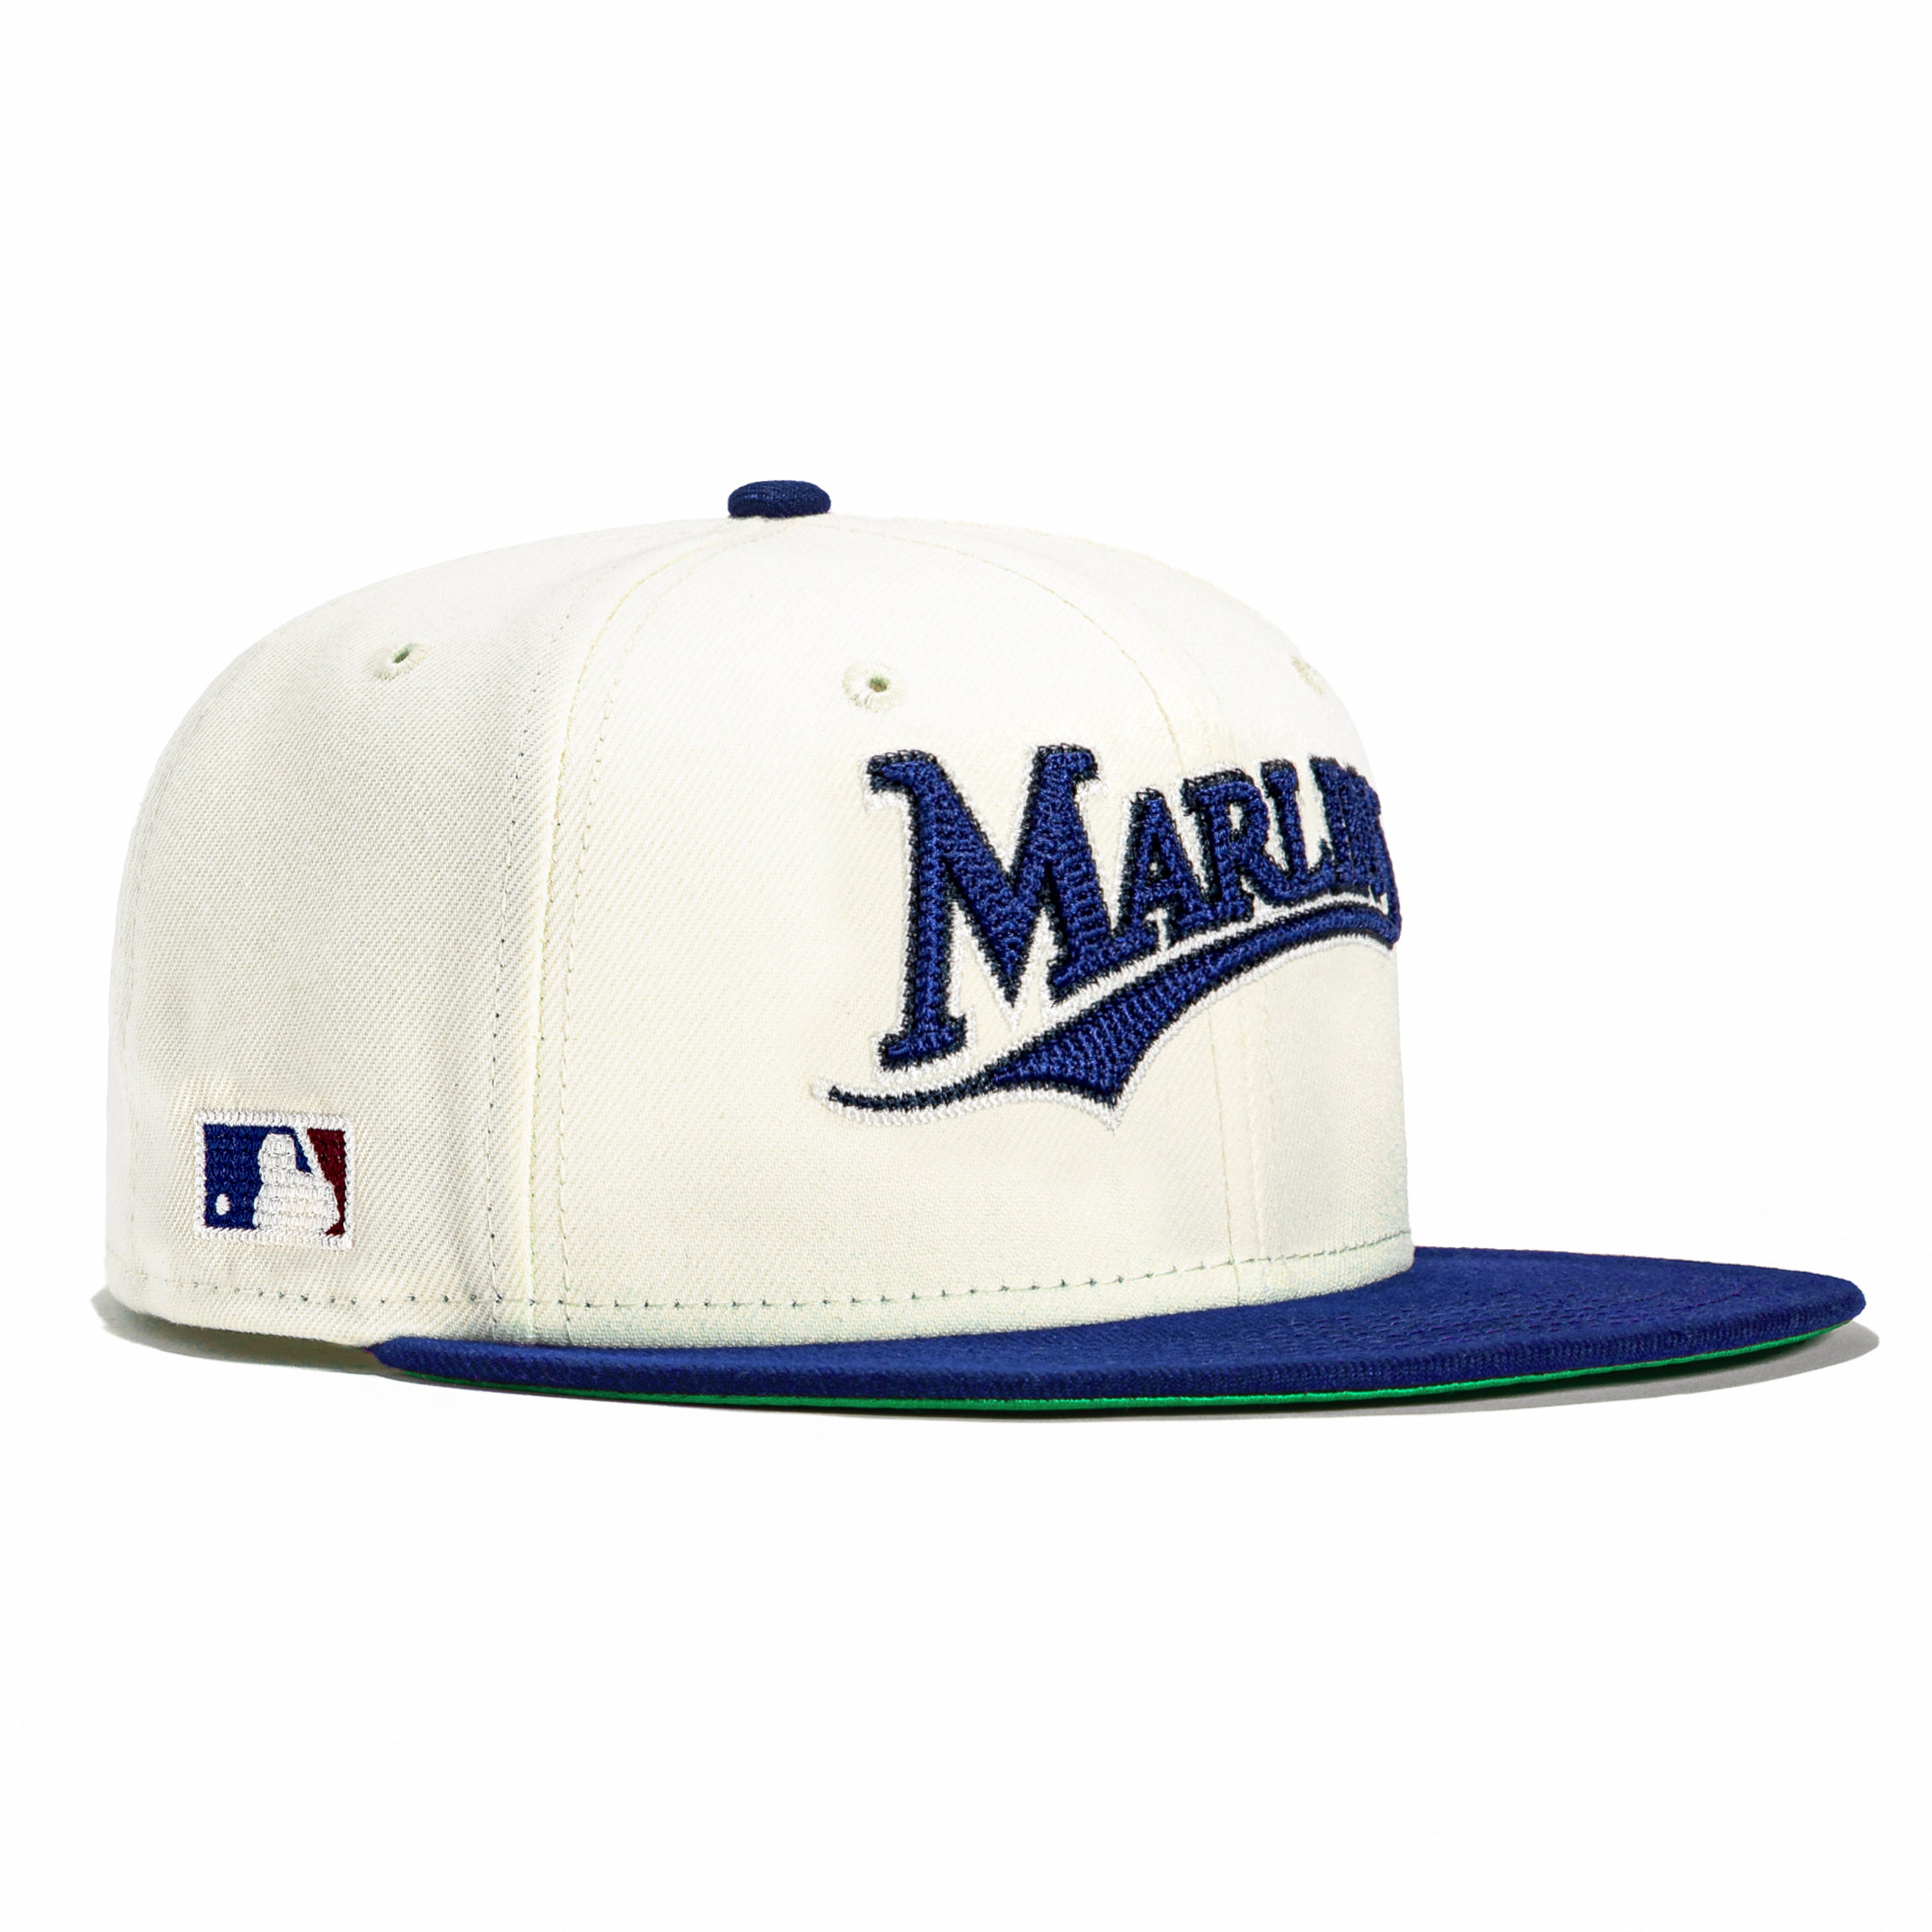 Miami Marlins New Era The League 2-Tone Adjustable Hat - Black